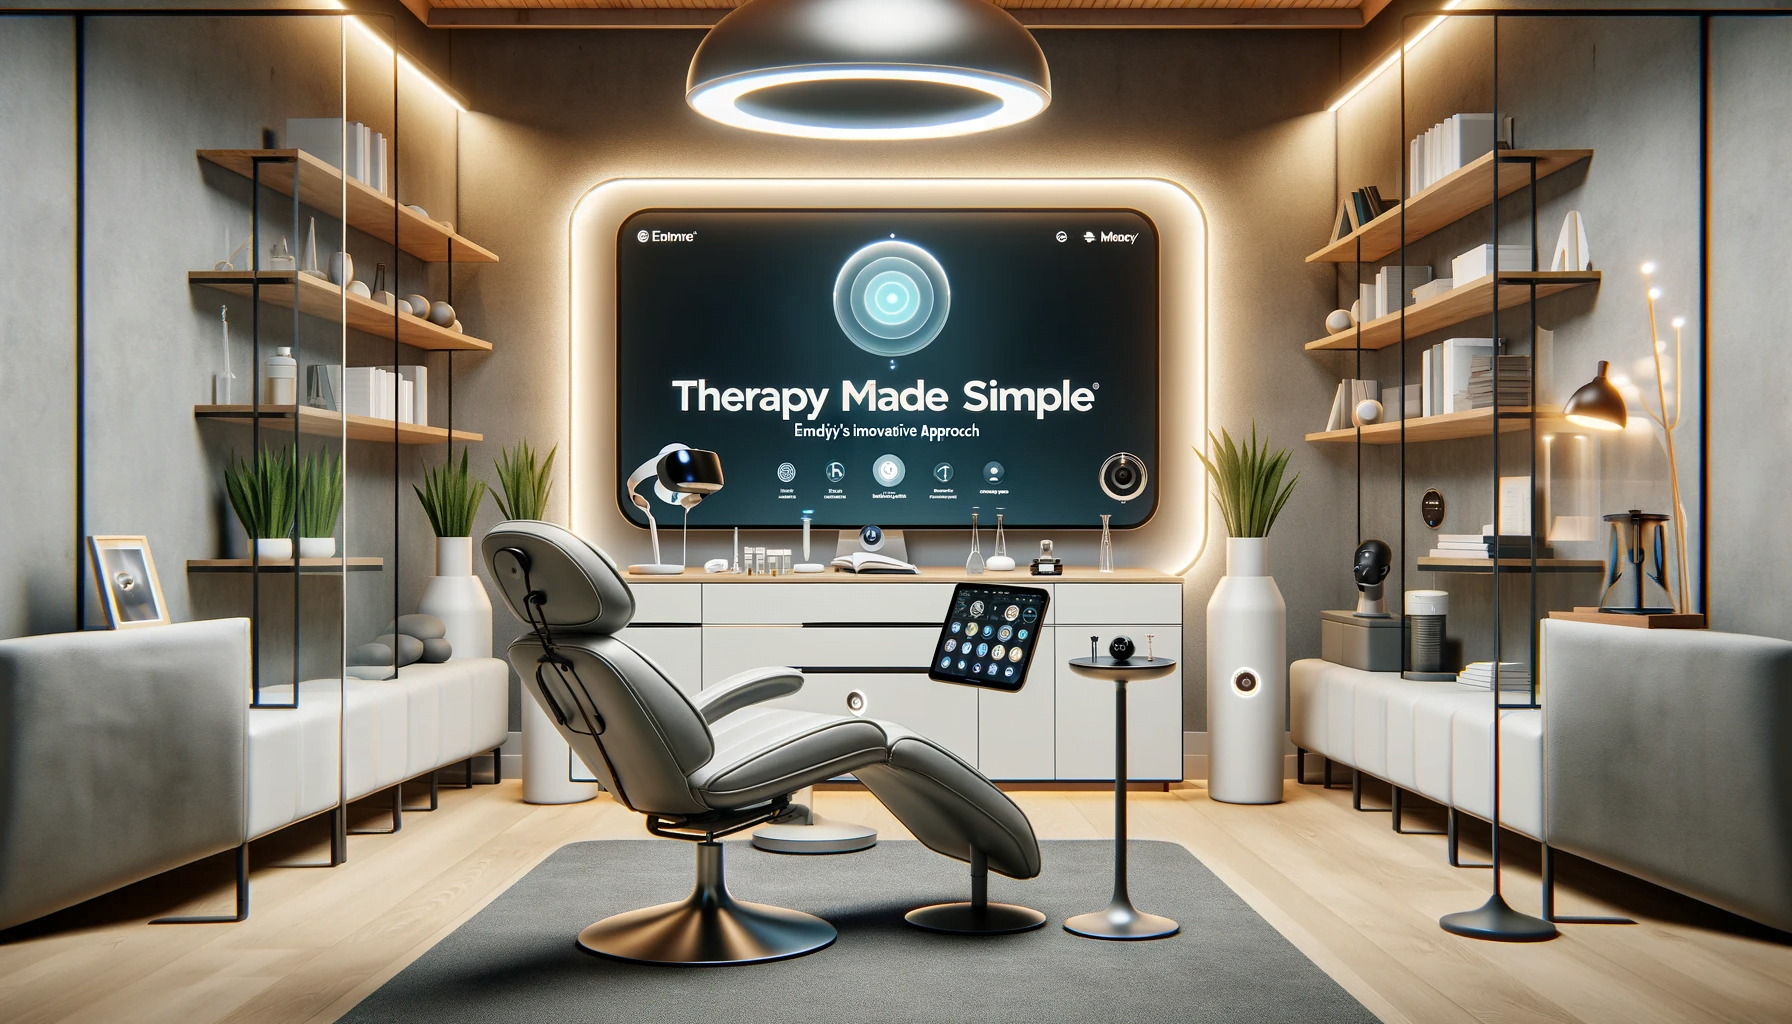 TherapyMadeSimple: eMINDy's Innovative Approach